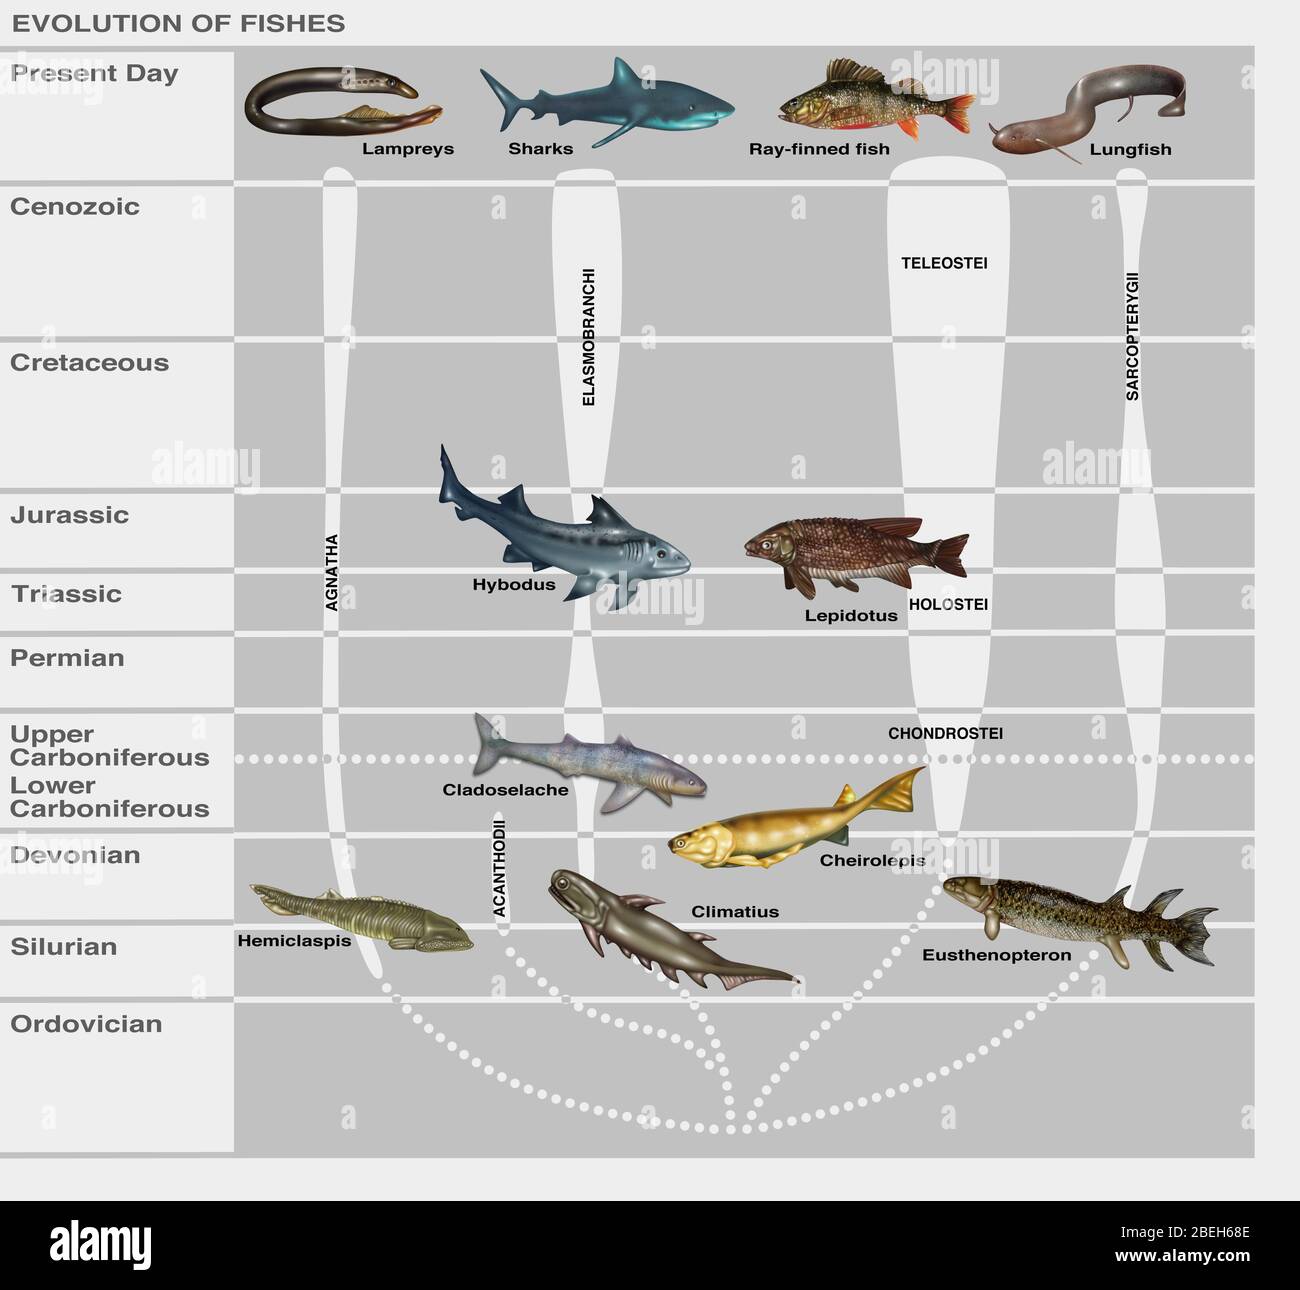 Evolution of Fishes, Illustration Stock Photo